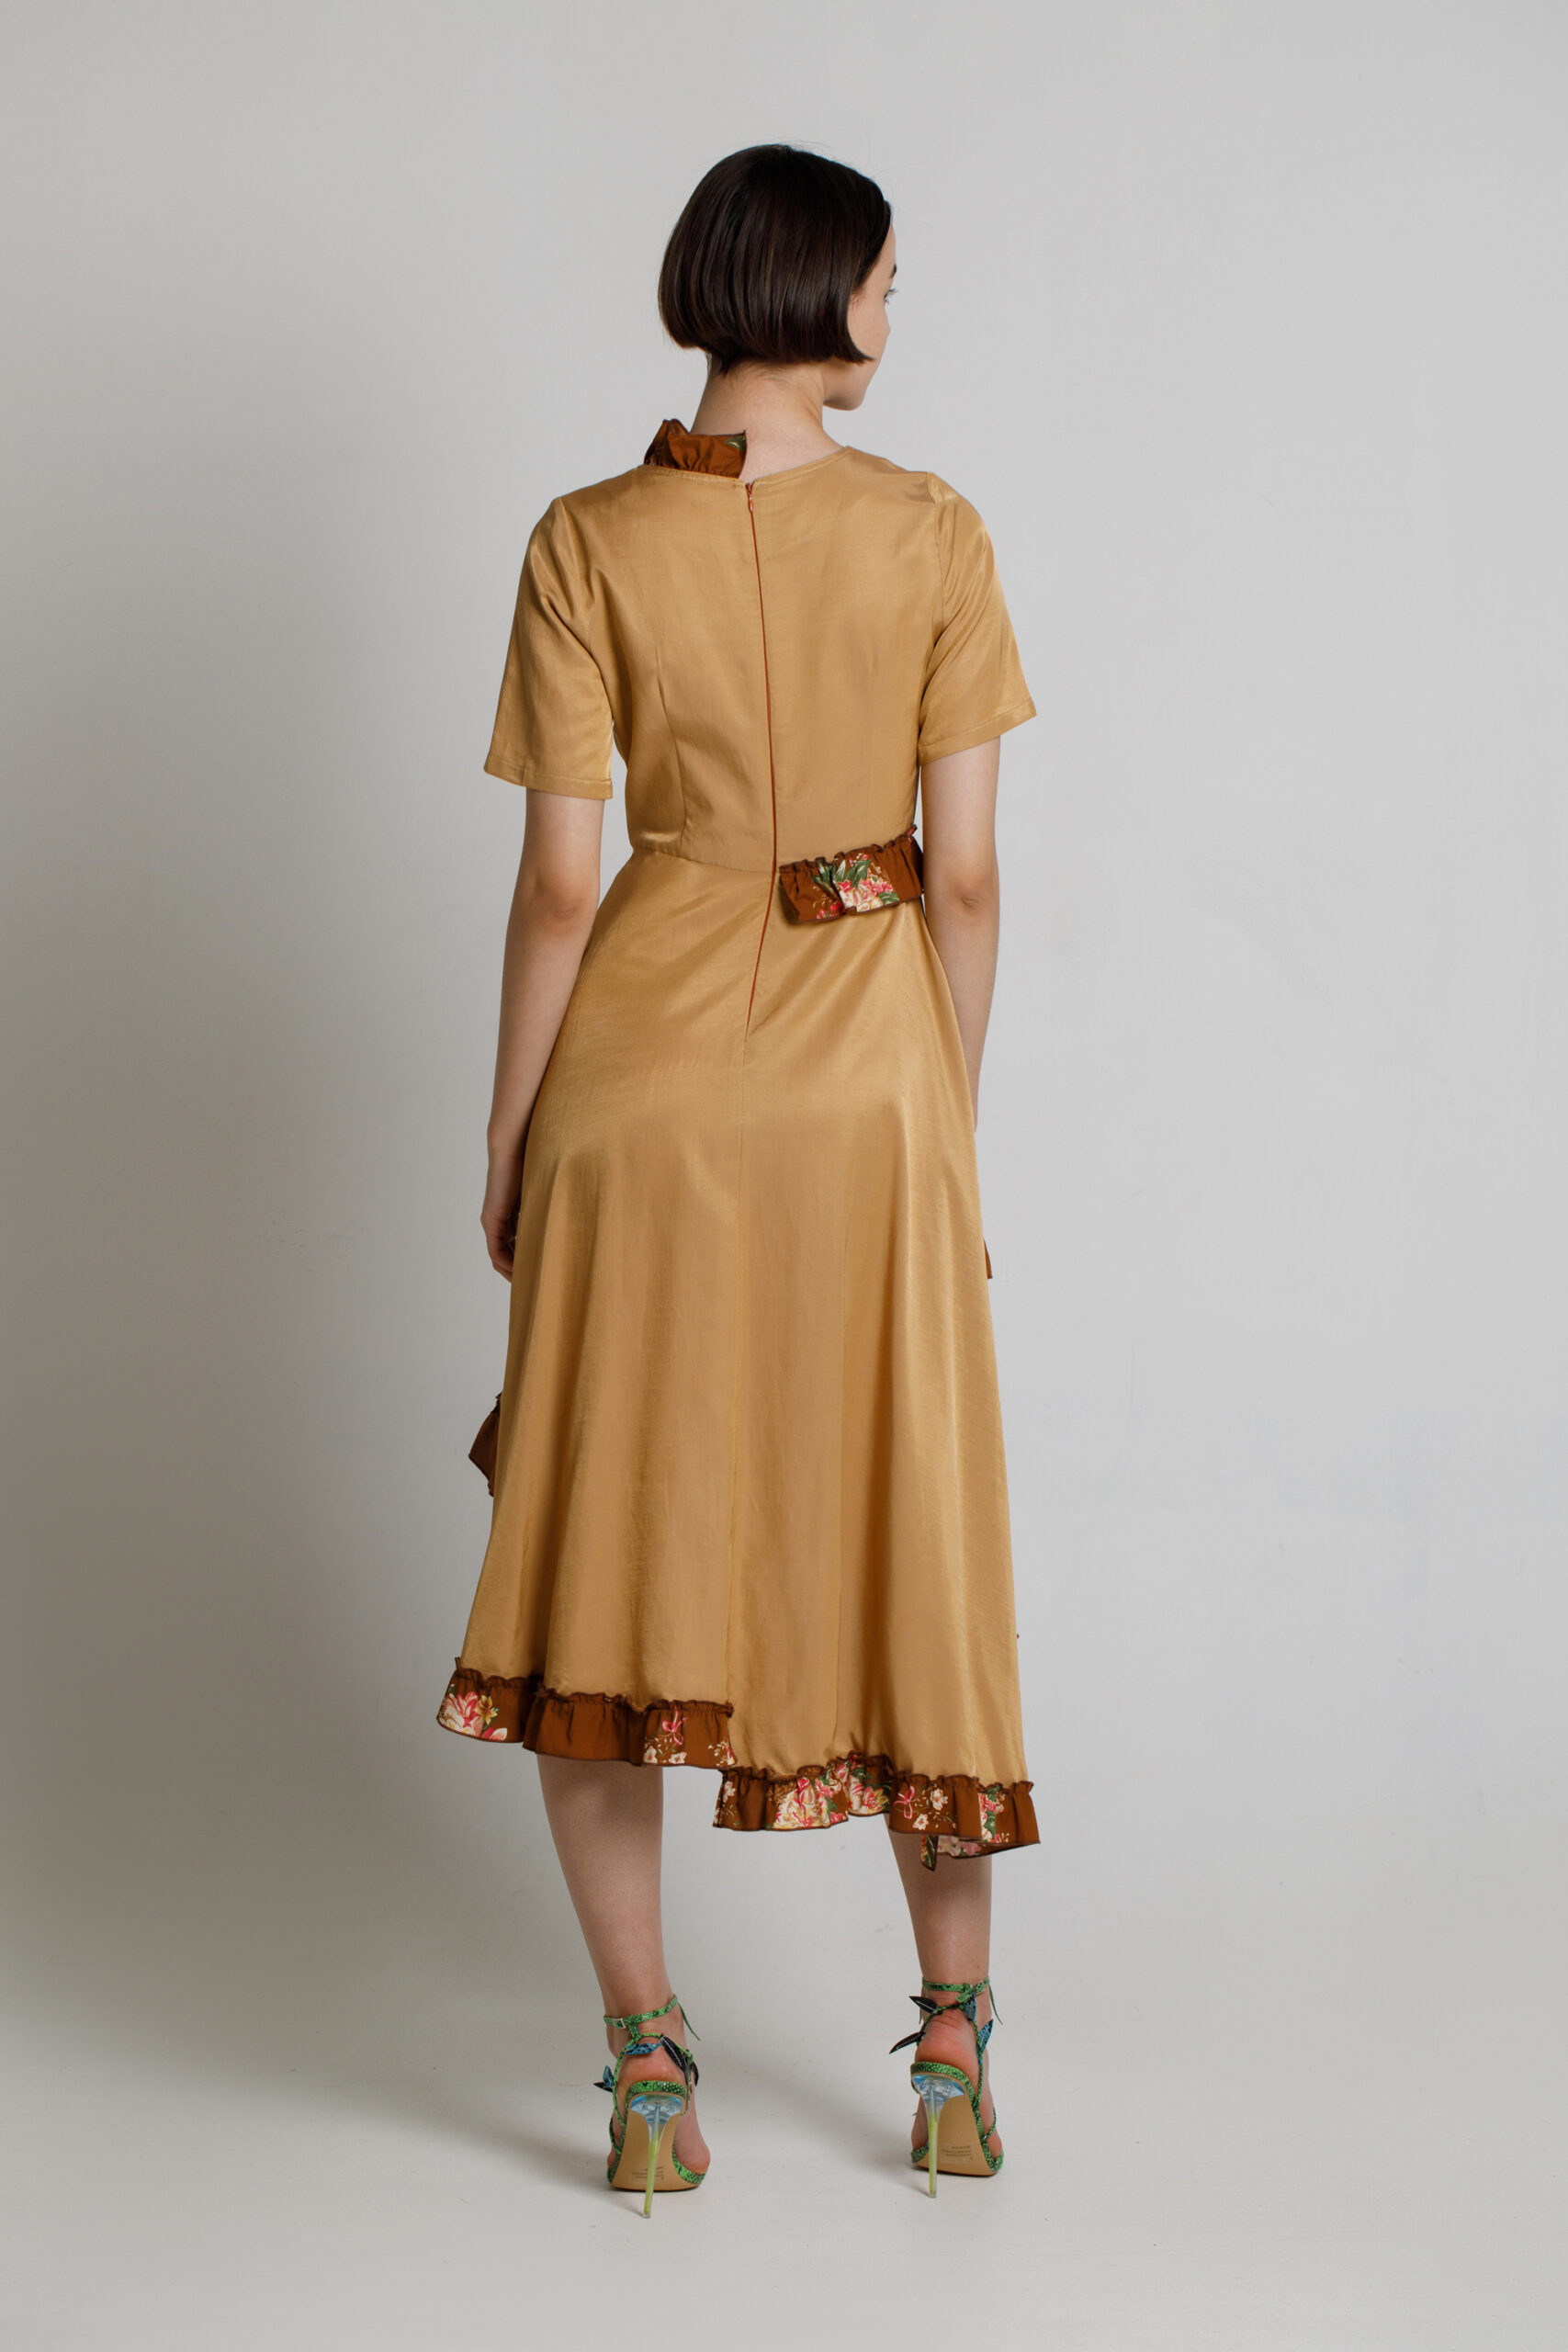 HERA cream casual asymmetric dress with ruffles. Natural fabrics, original design, handmade embroidery